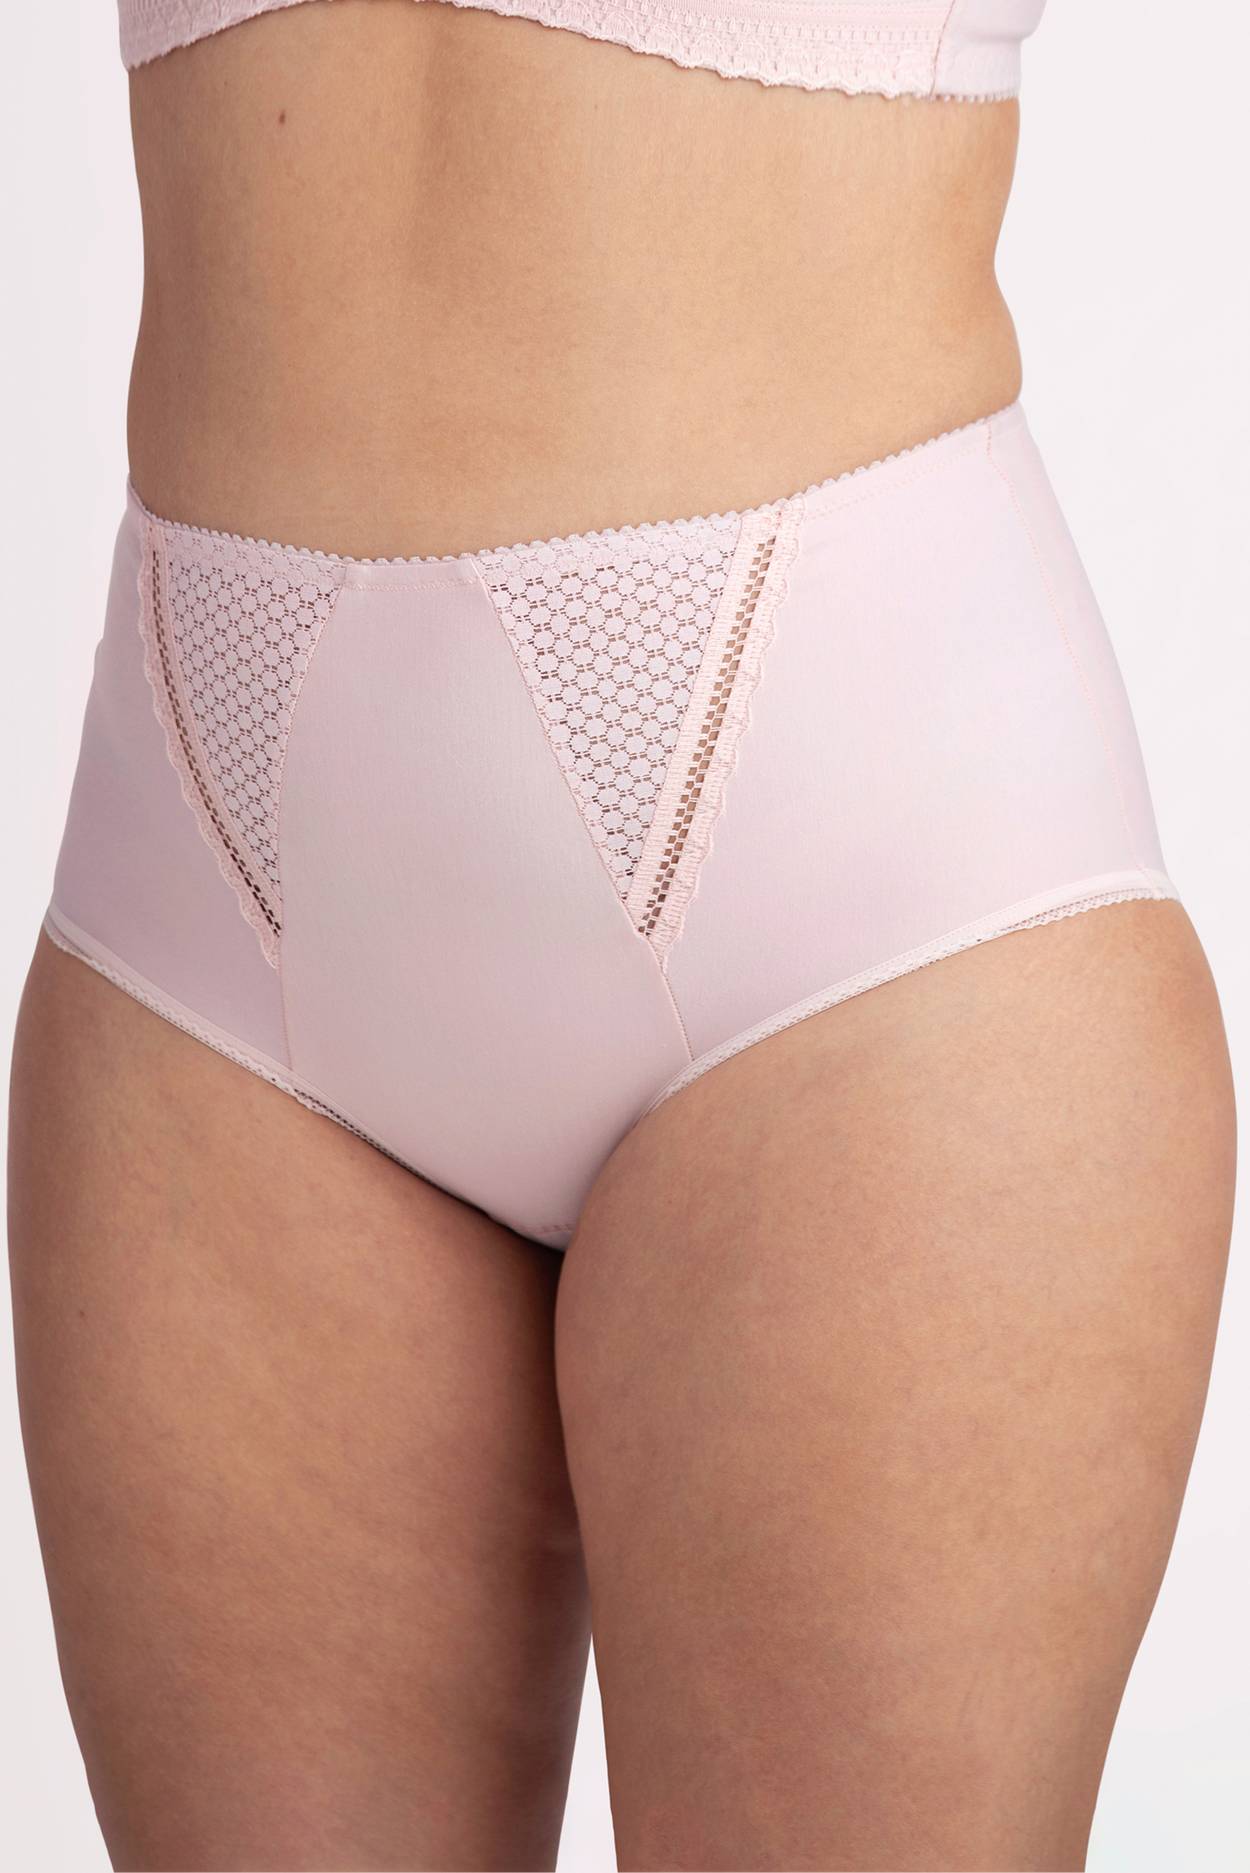 Cotton Dots Lace panty girdle